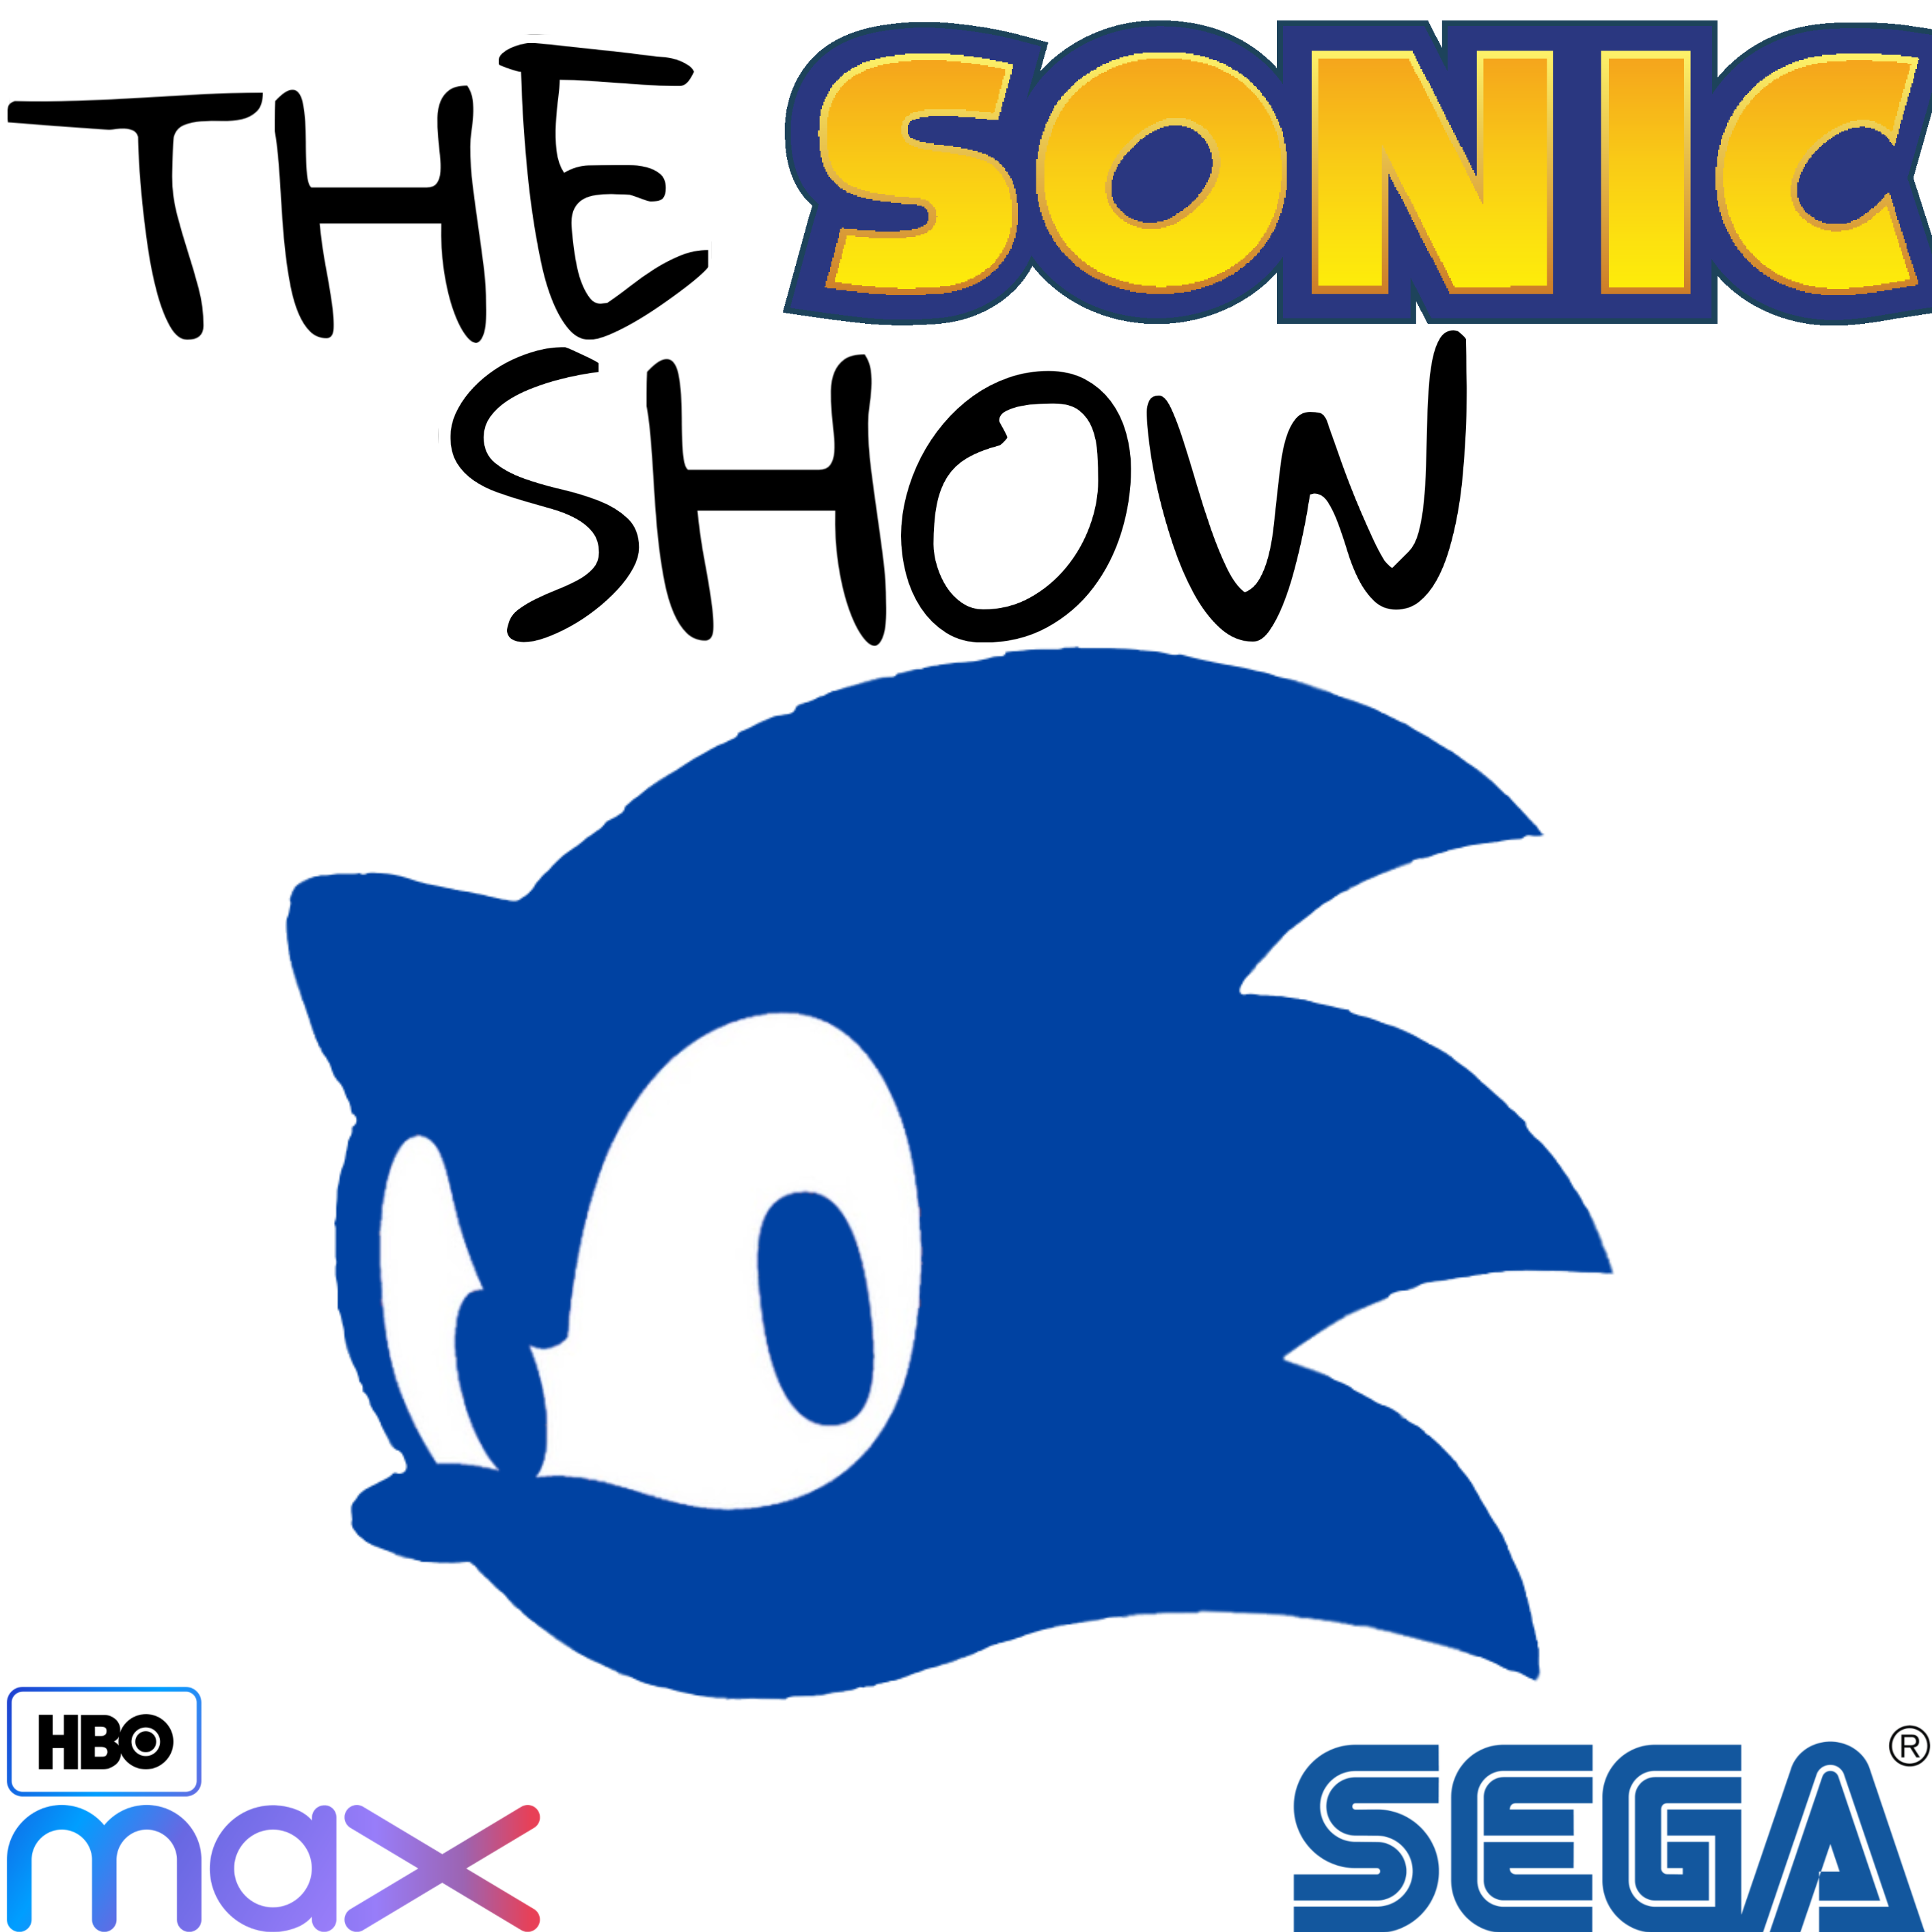 SONIC 3 HYPE — Got some new information regarding Sonic 2′s